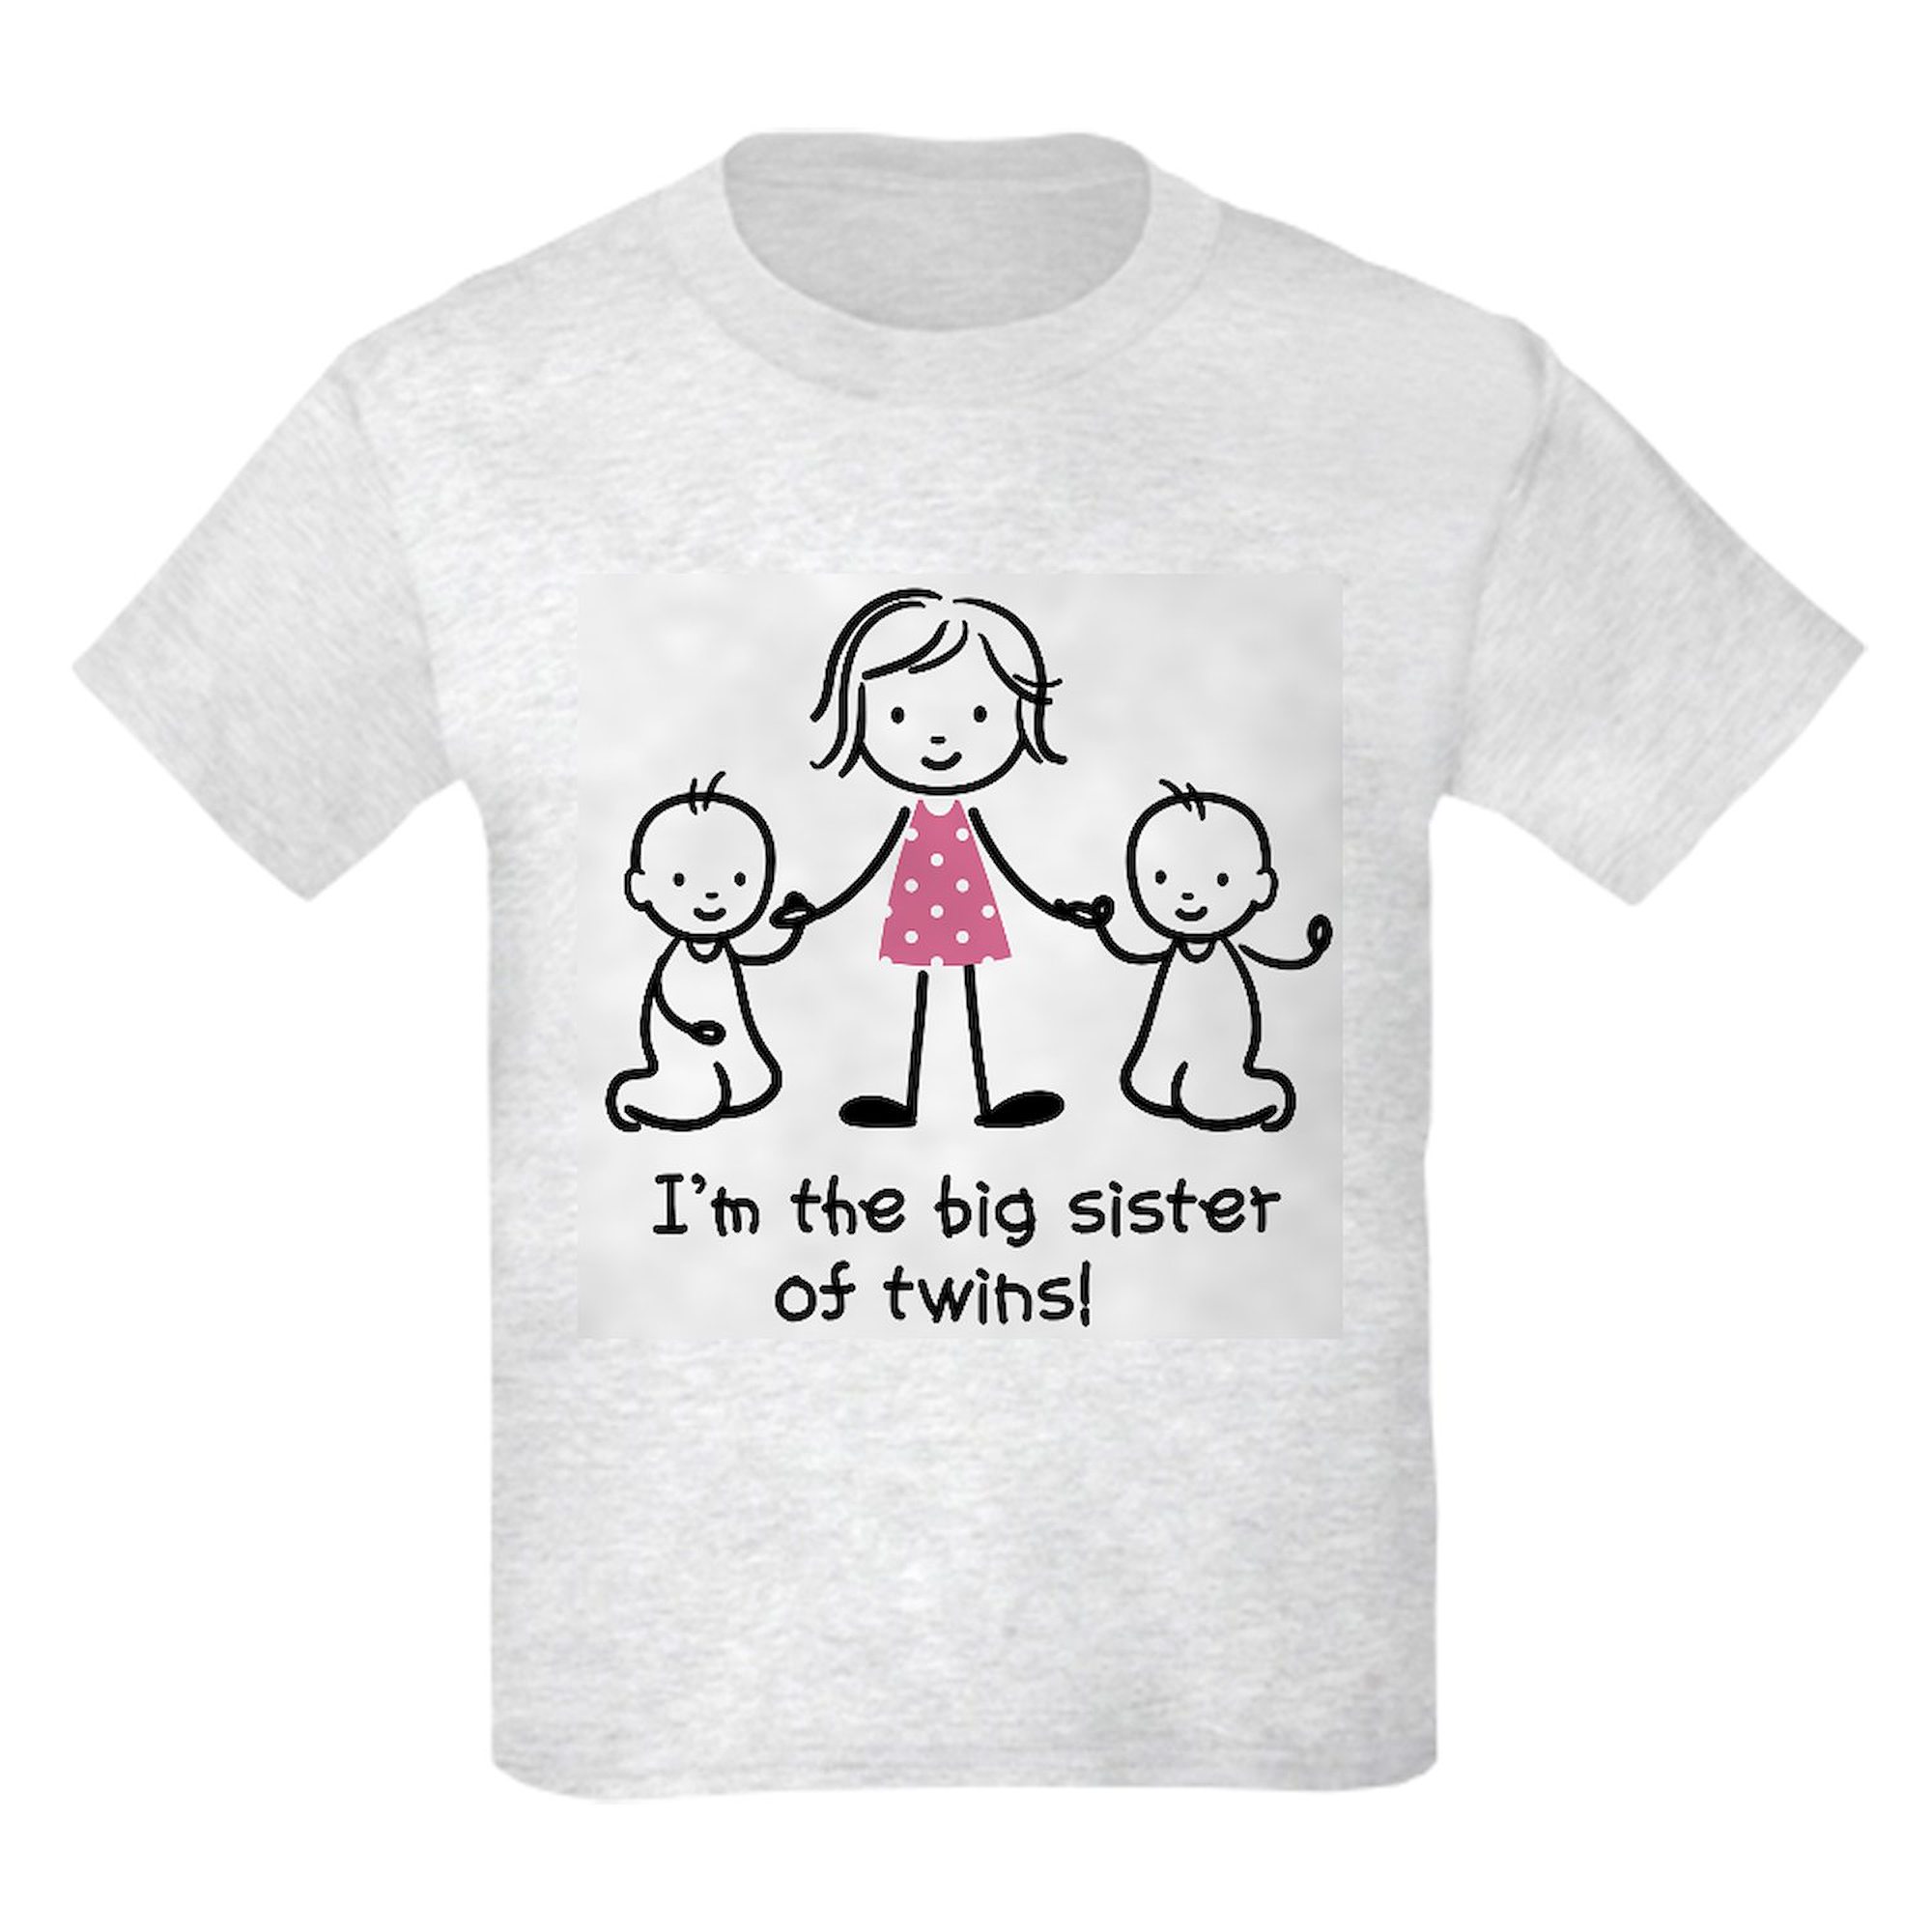 CafePress - Big Sister Of Twins T Shirt - Light T-Shirt Kids XS-XL - image 1 of 4